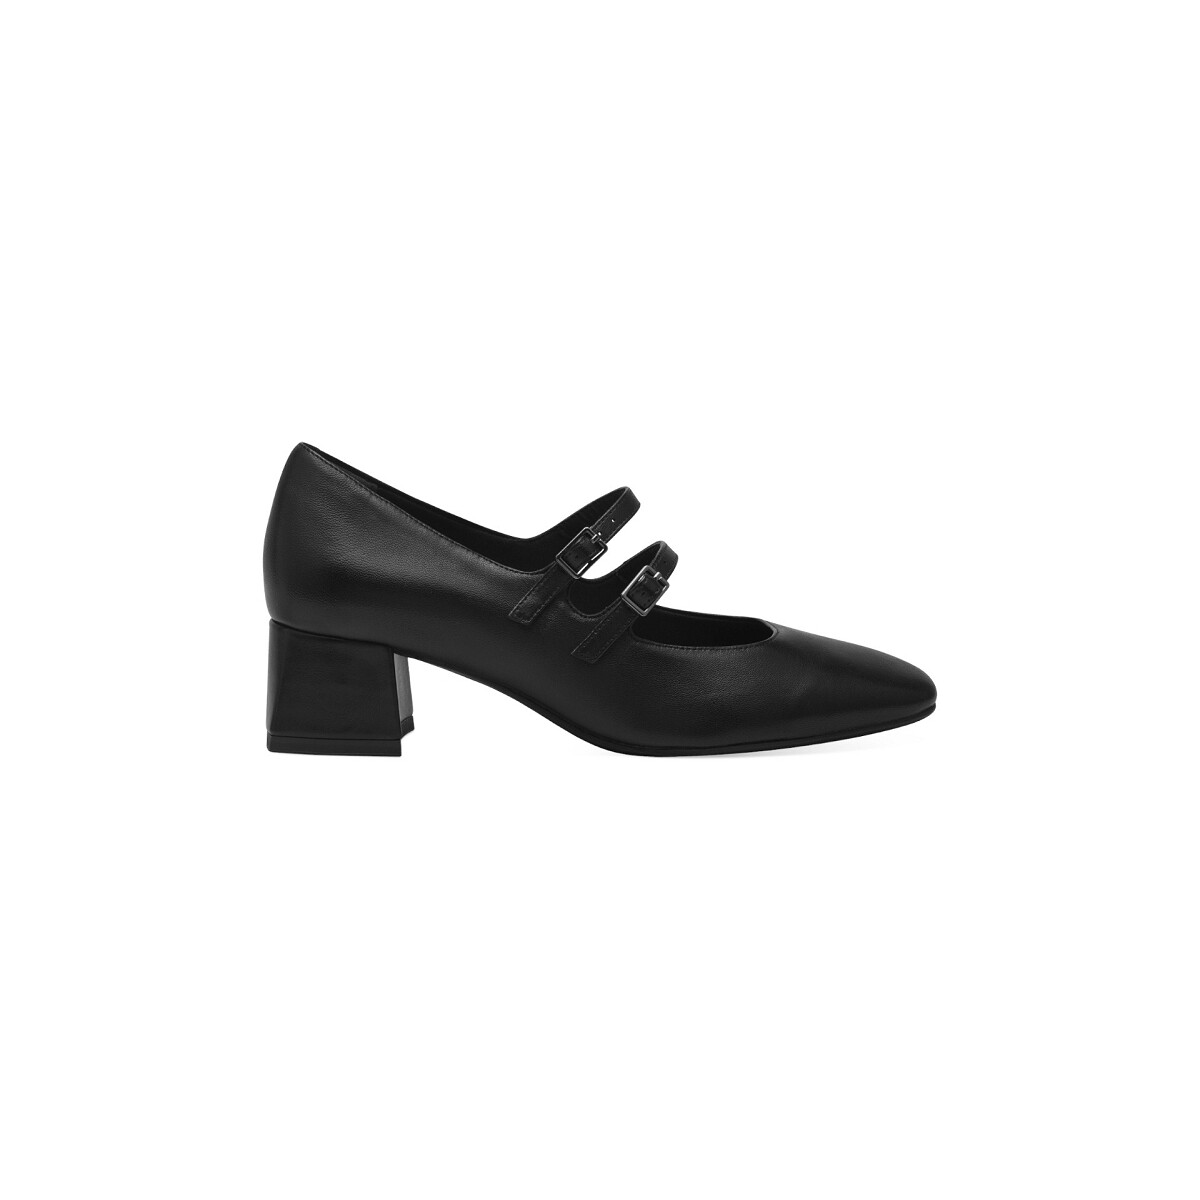 Cipők Női Félcipők Tamaris 22304-41 Fekete 